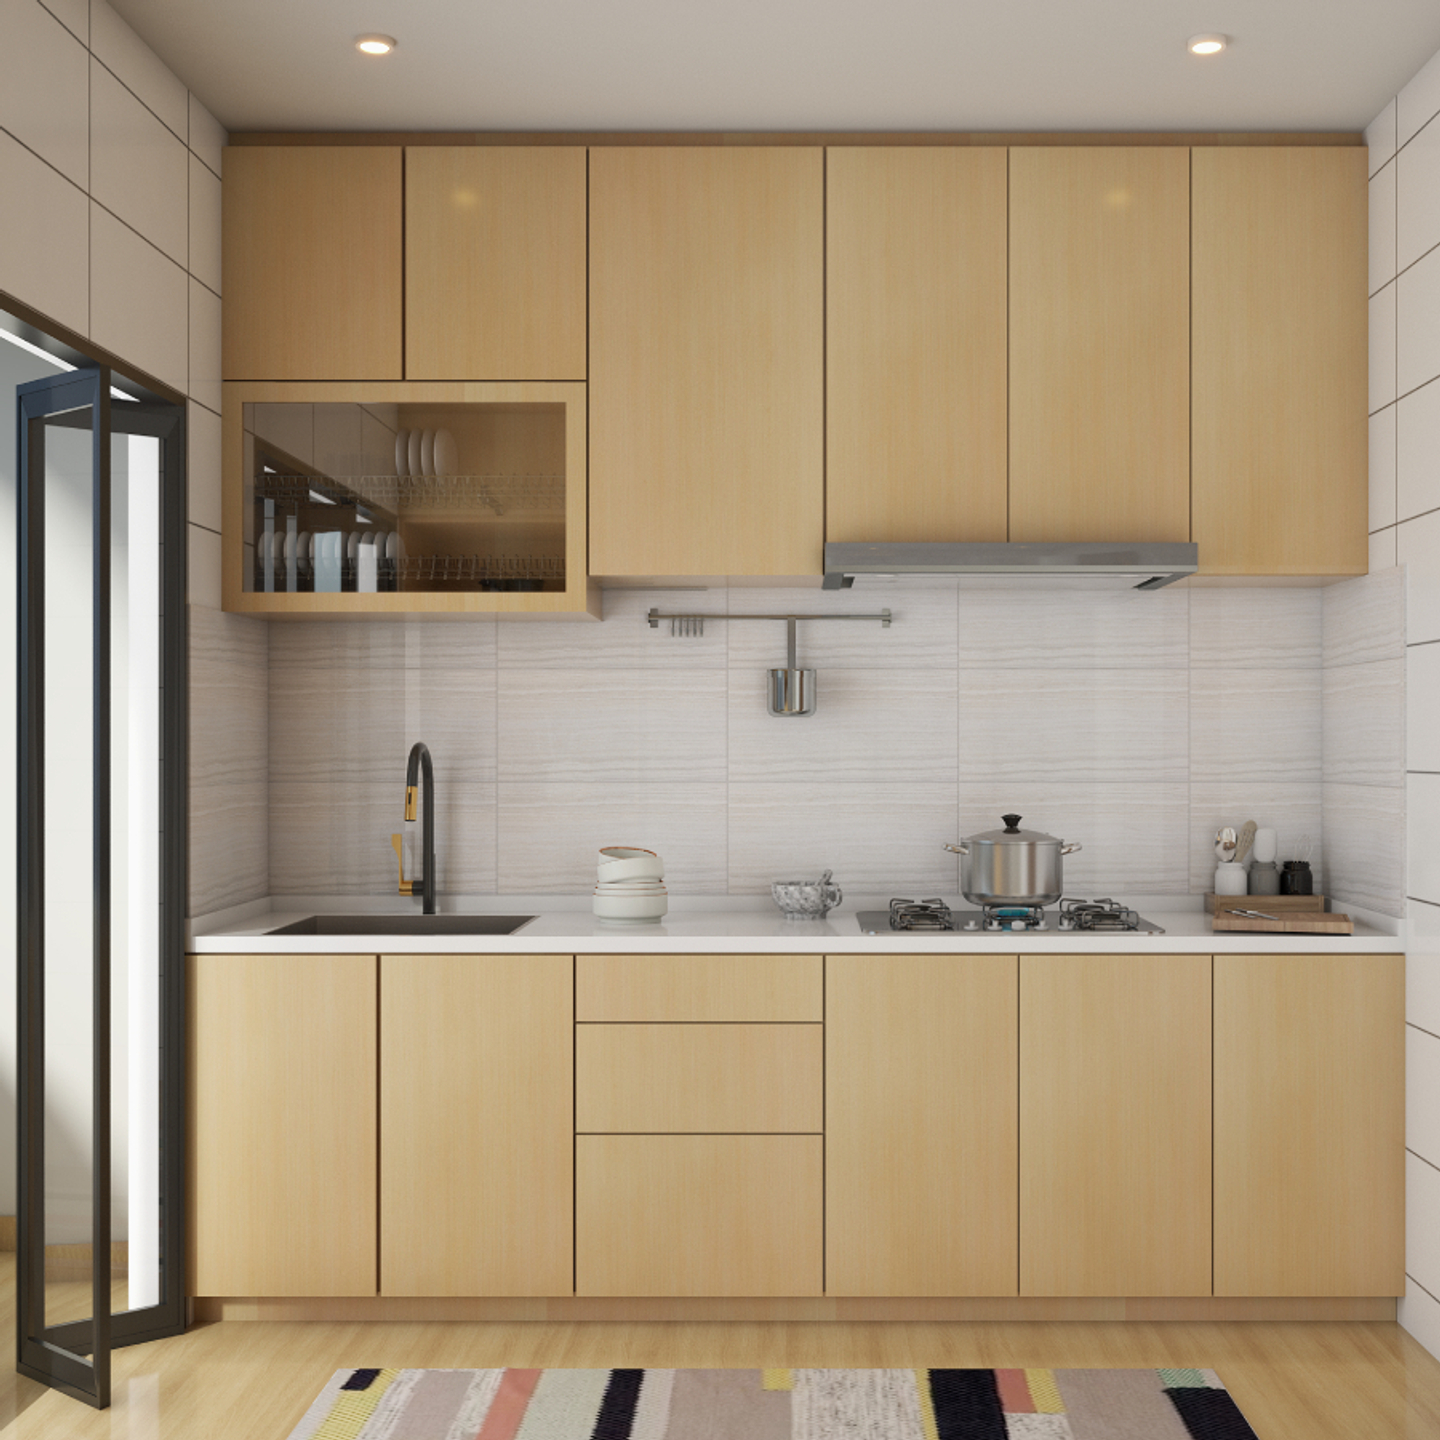 Low-Maintenance Contemporary Design For Kitchens - Livspace